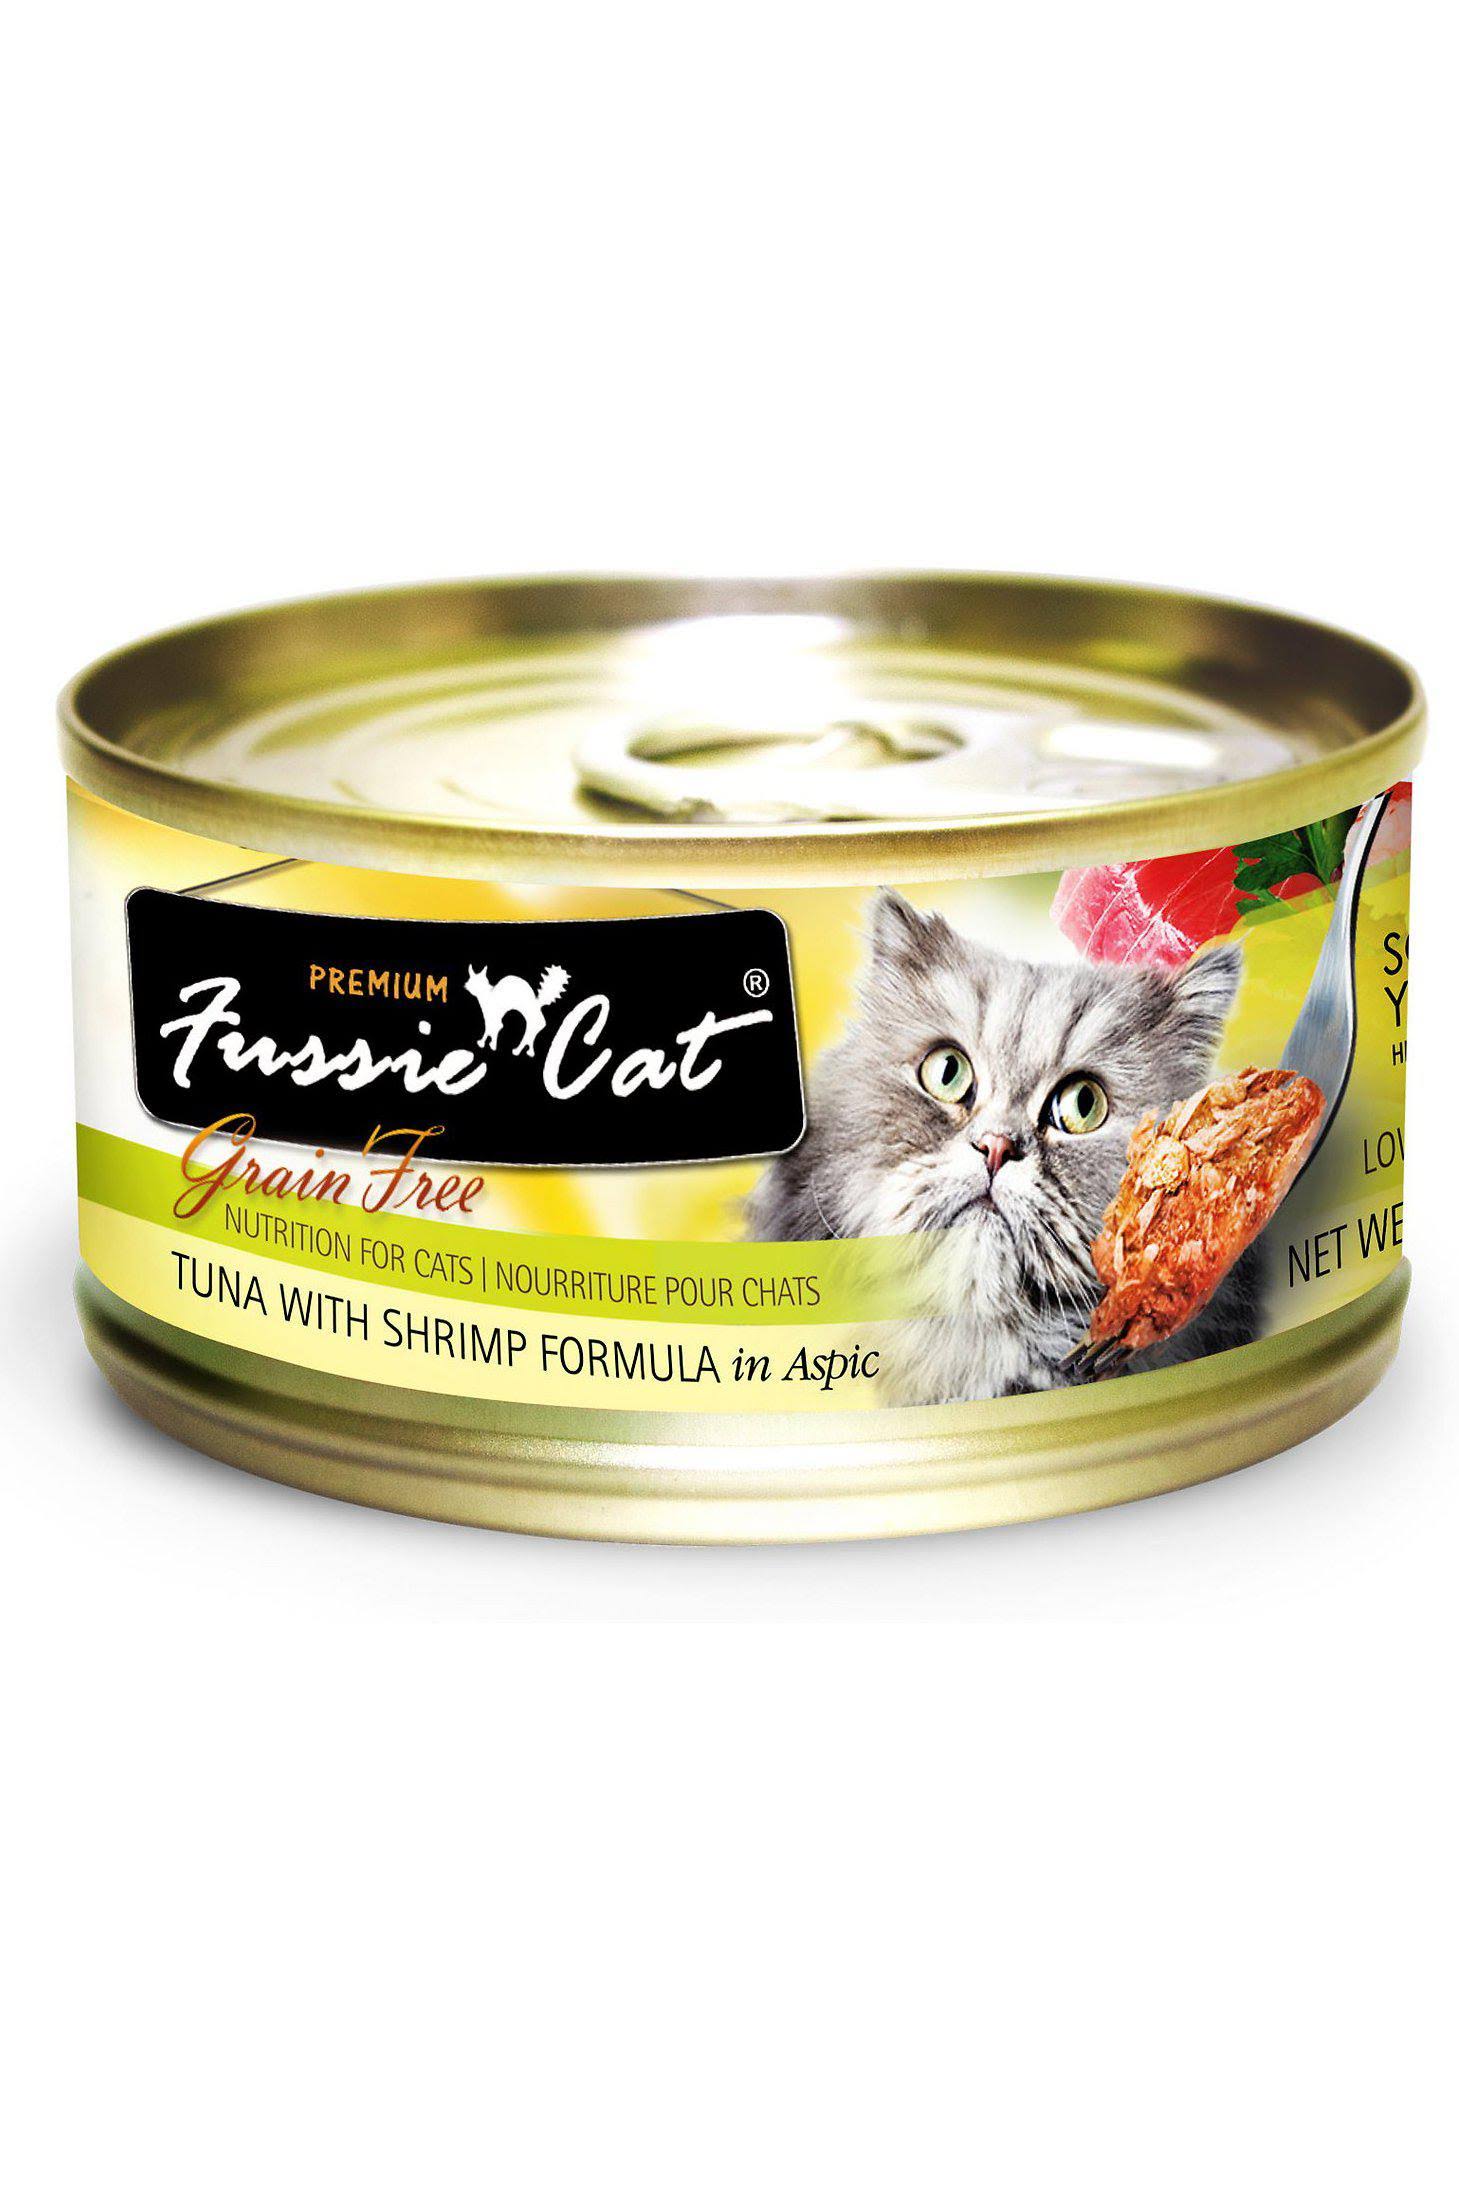 Fussie Cat Tuna with Shrimp Formula in Aspic Grain-Free Canned Cat Food